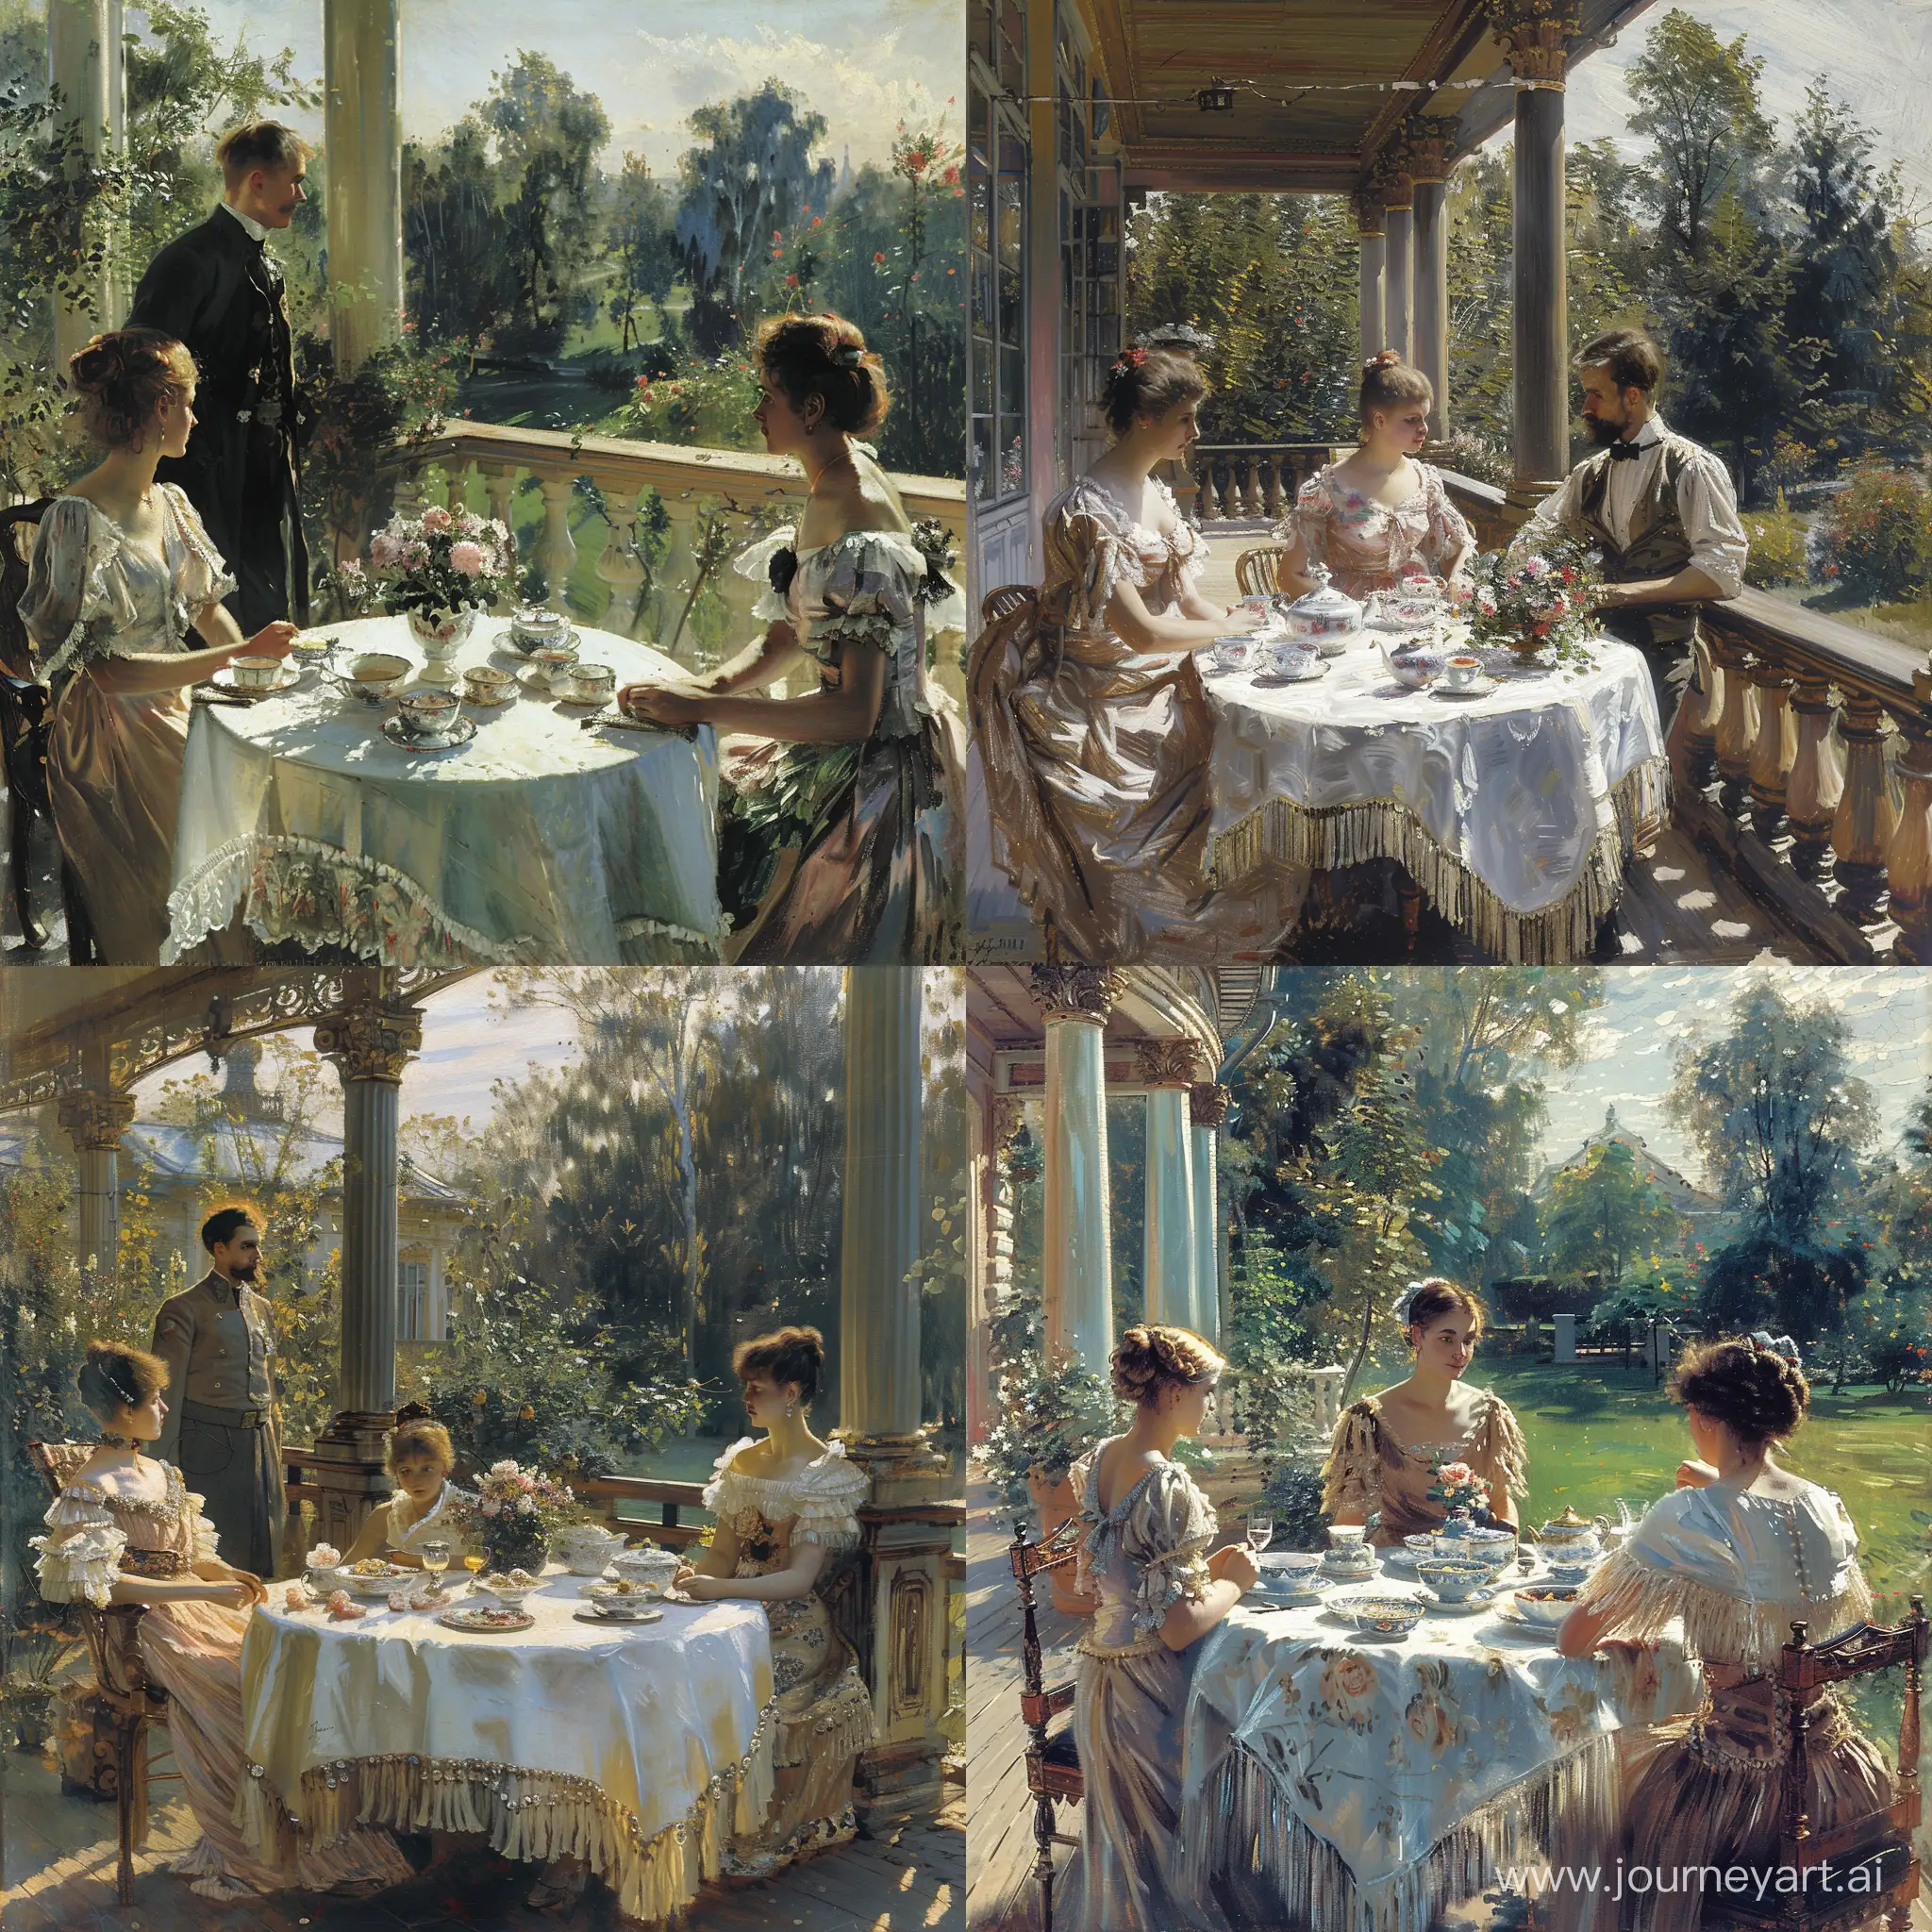 Noble-Family-Breakfast-Scene-Impressionist-Art-in-19th-Century-Russian-Empire-Manor-House